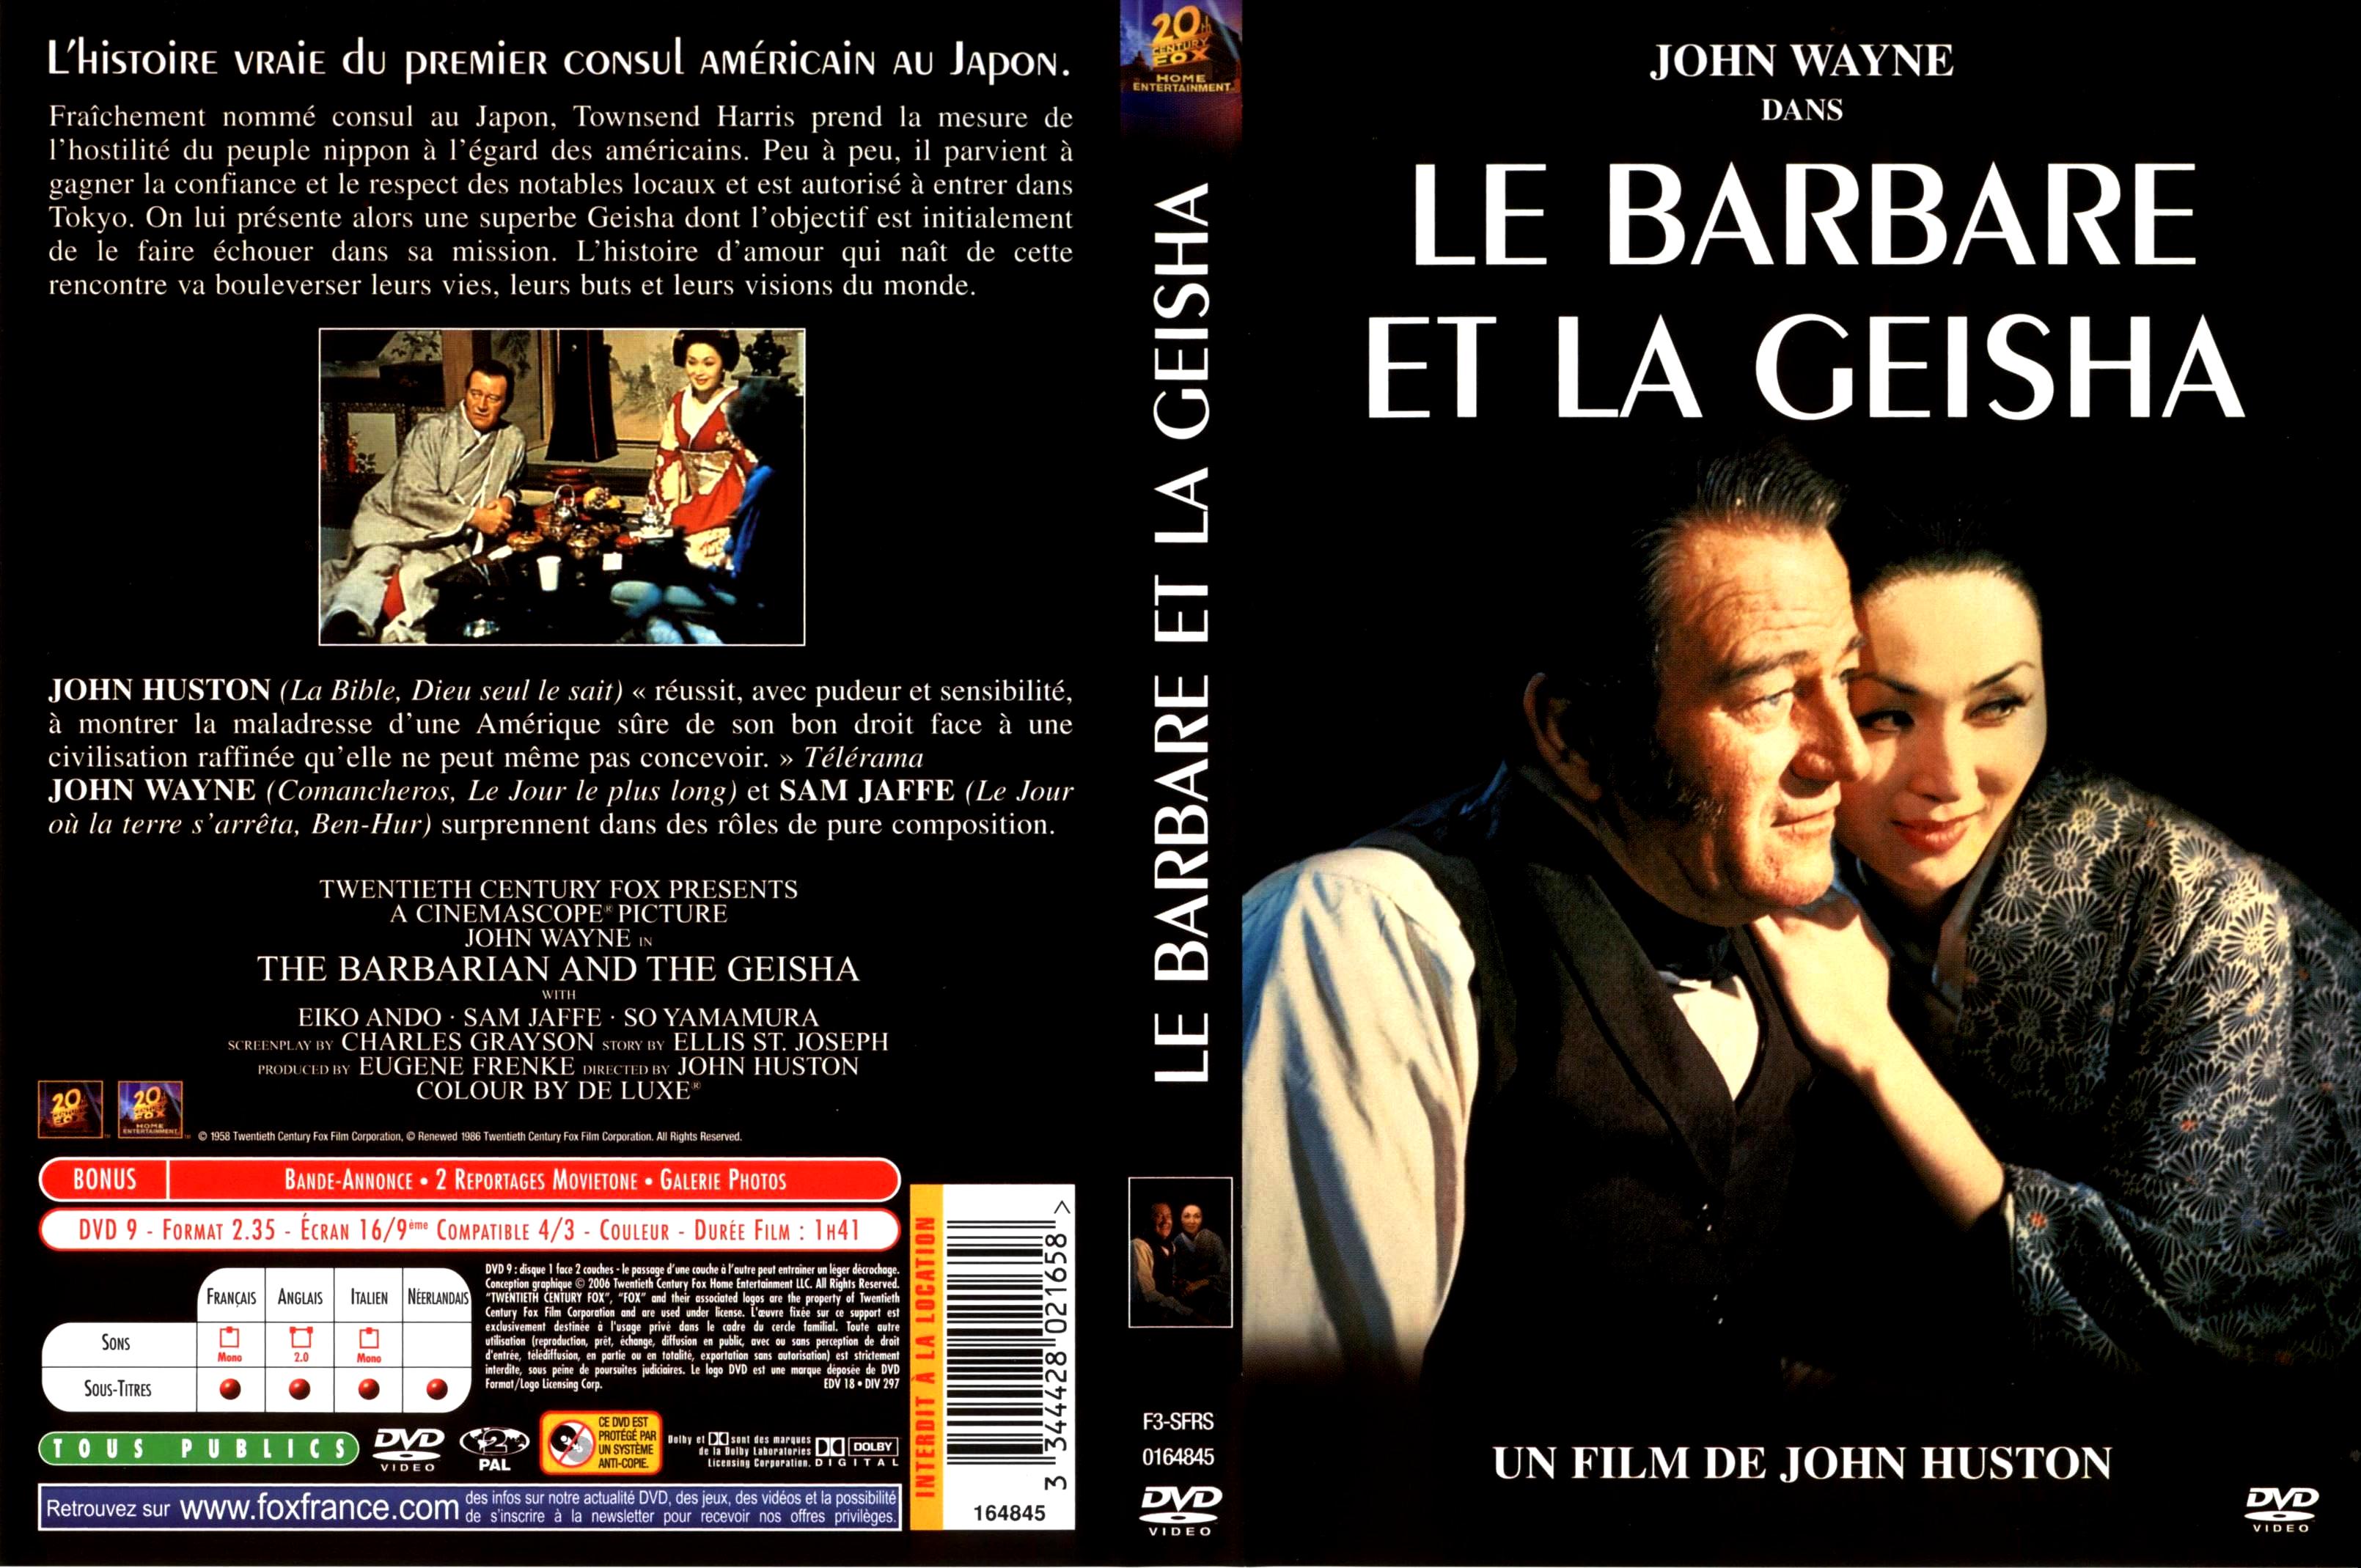 Jaquette DVD Le barbare et la geisha v2